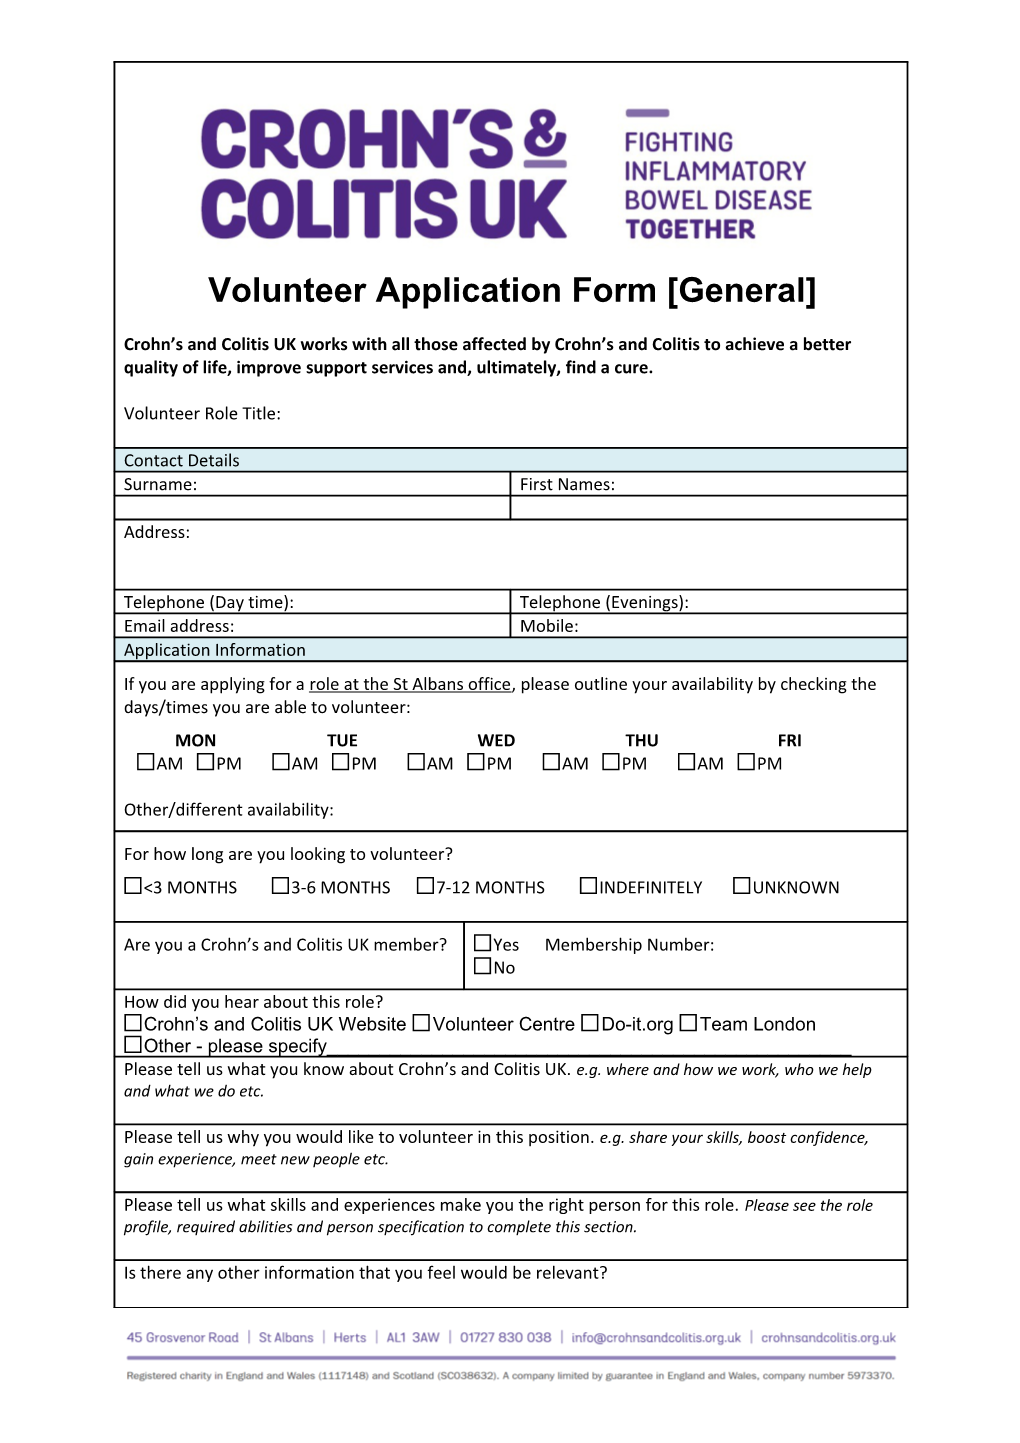 Volunteer Application Form General